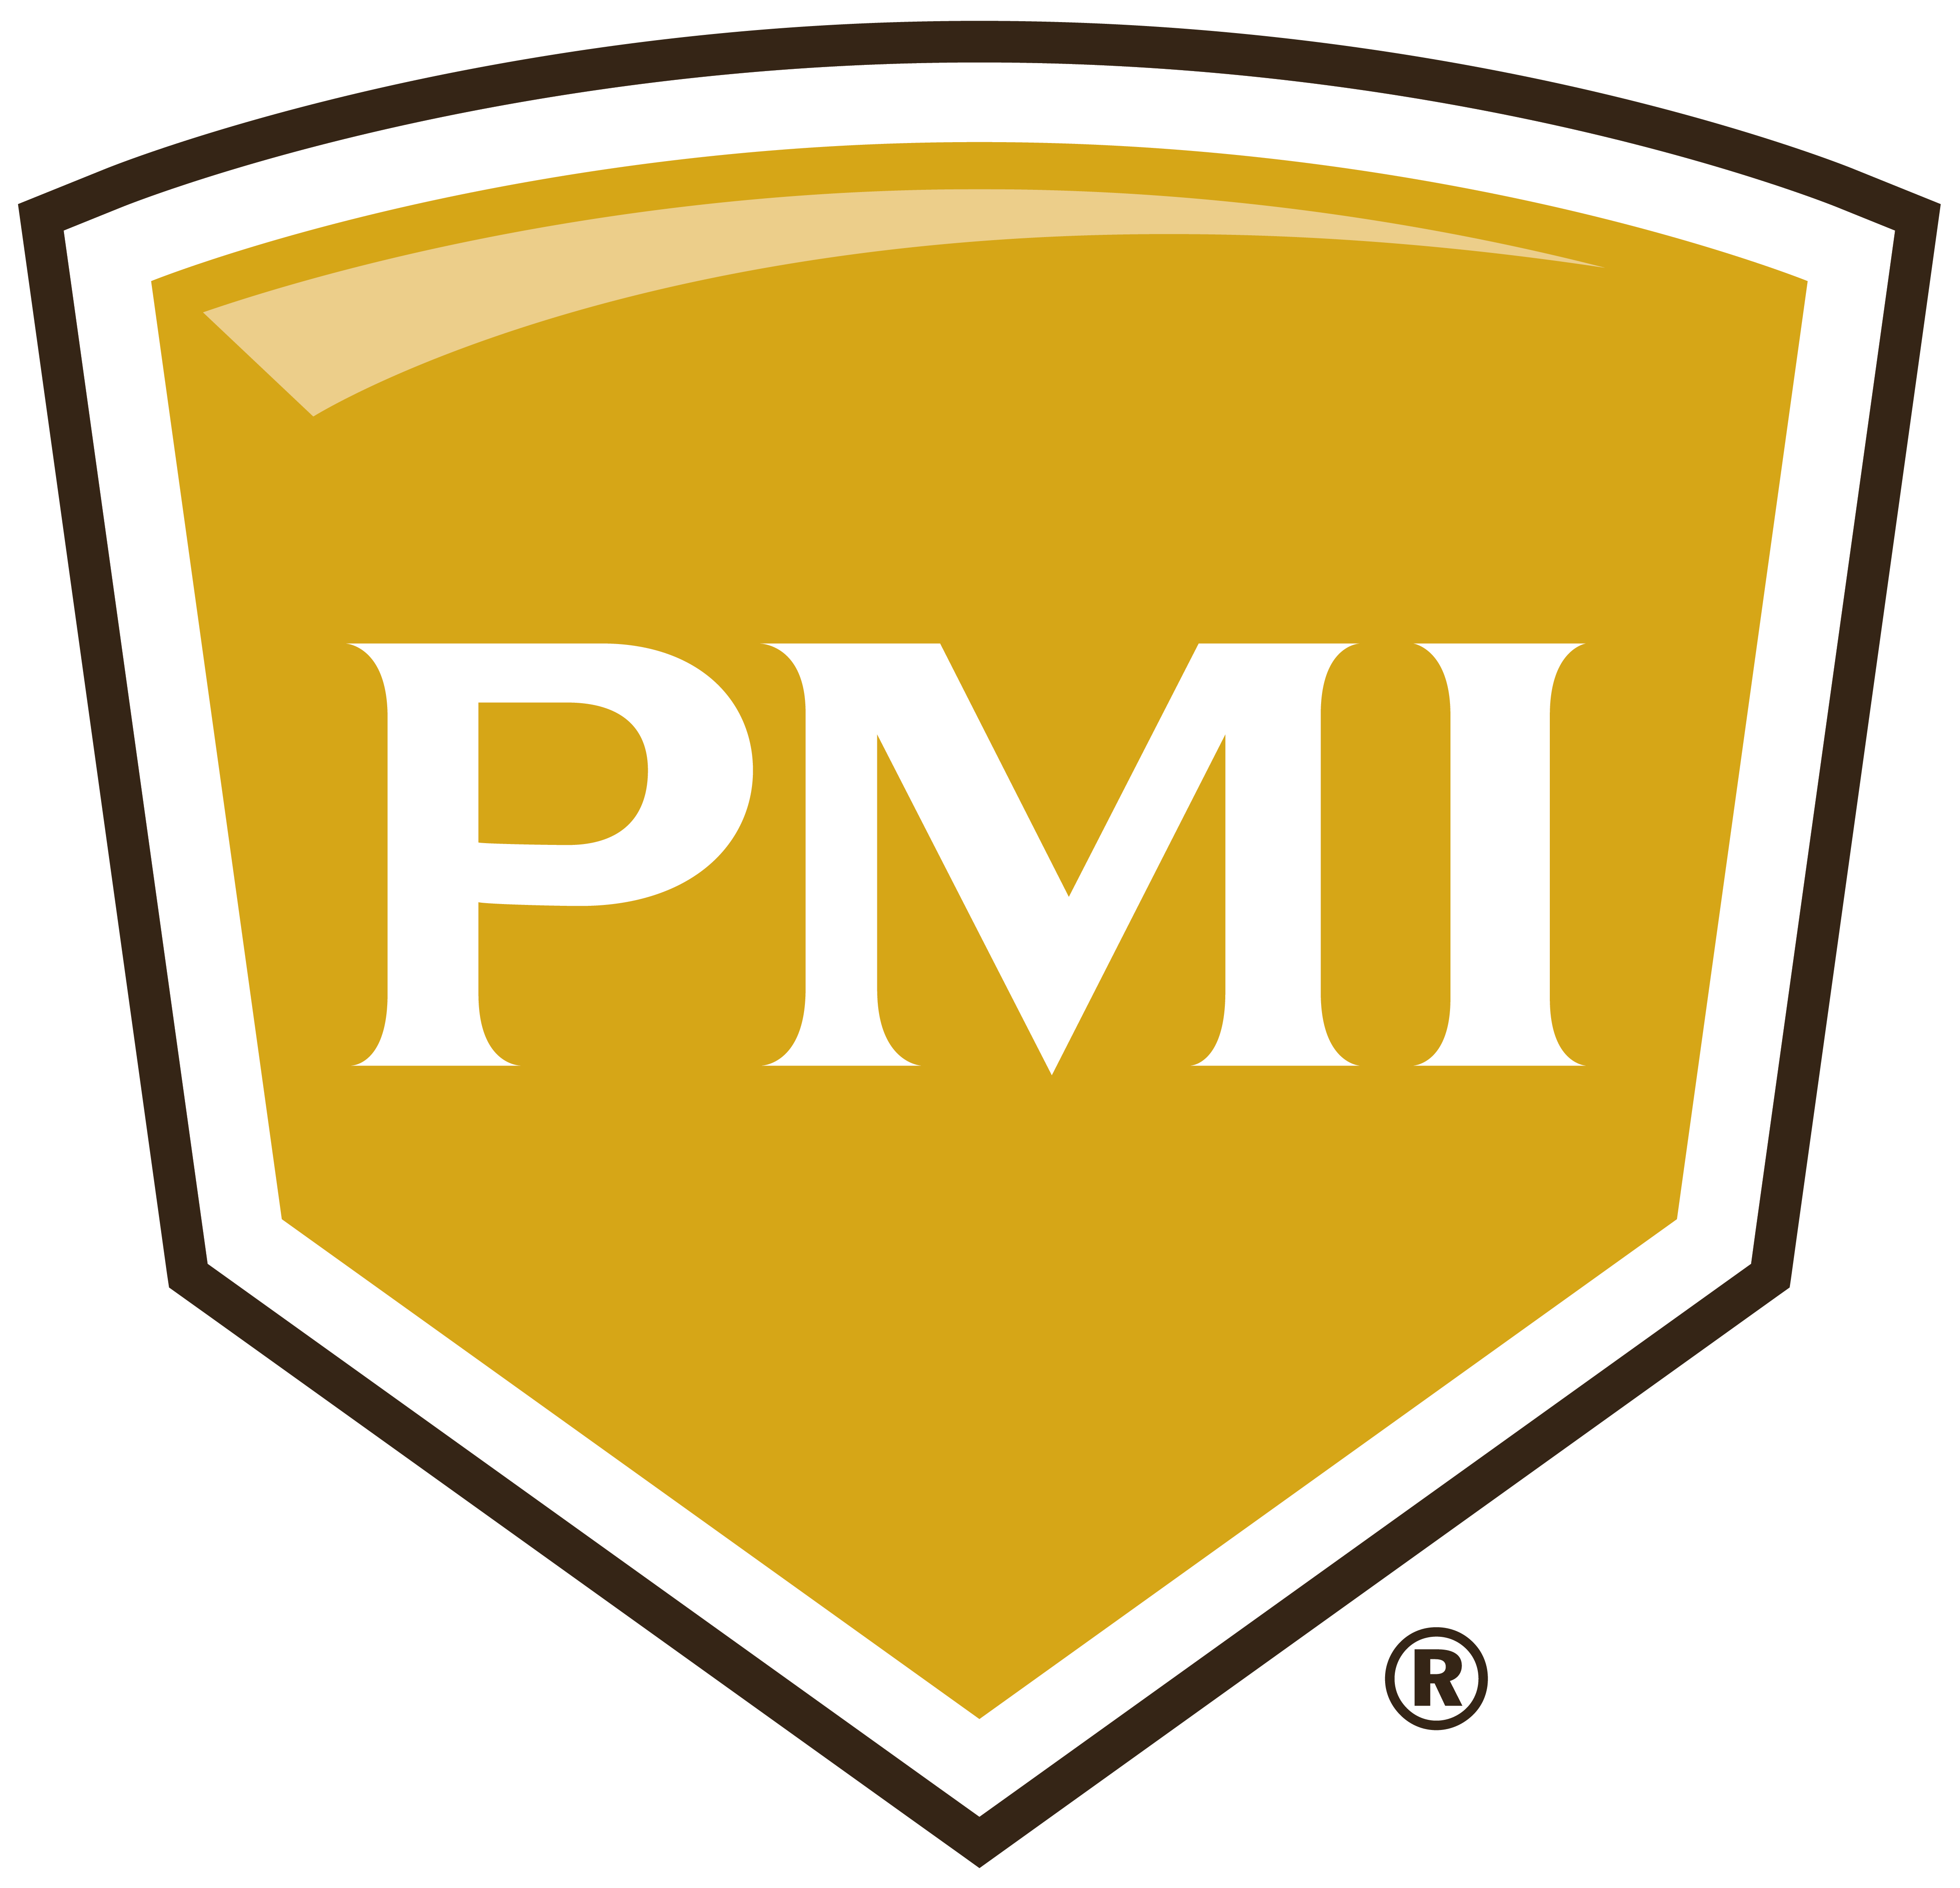 PMI Shield Logo